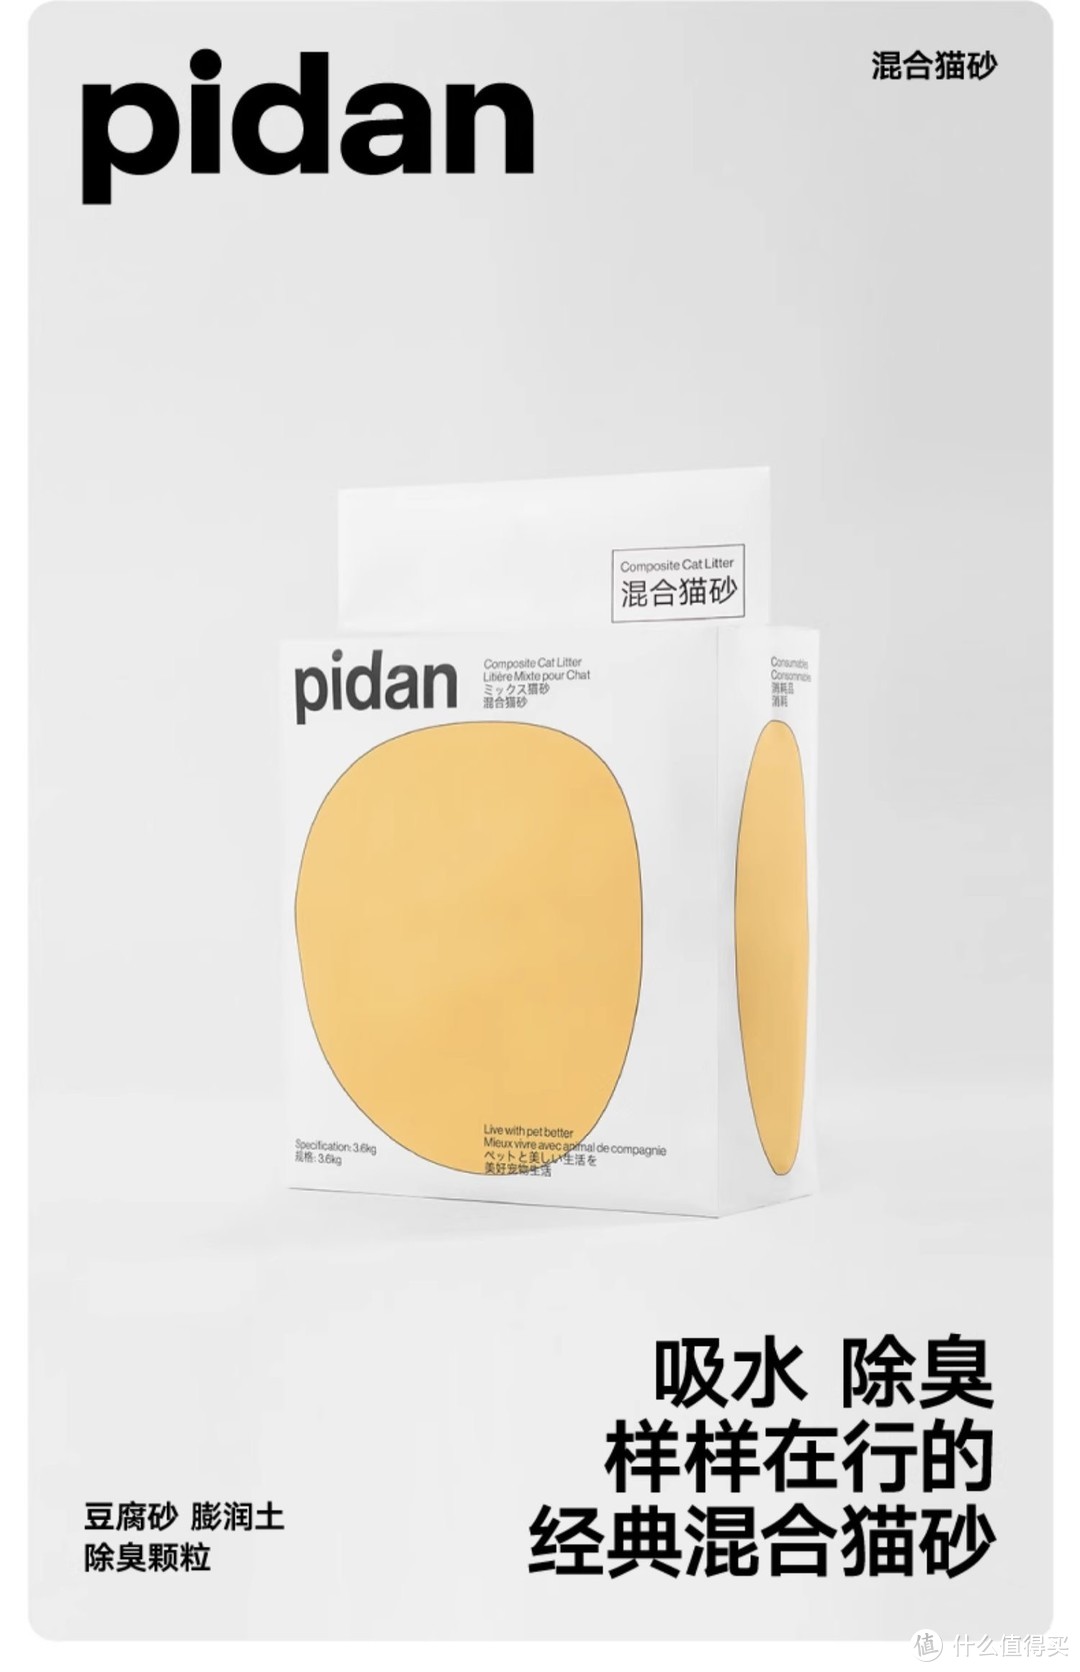 Pidan猫砂：致力于提供无尘豆腐砂膨润土砂混合除臭的经典猫咪用品Pidan